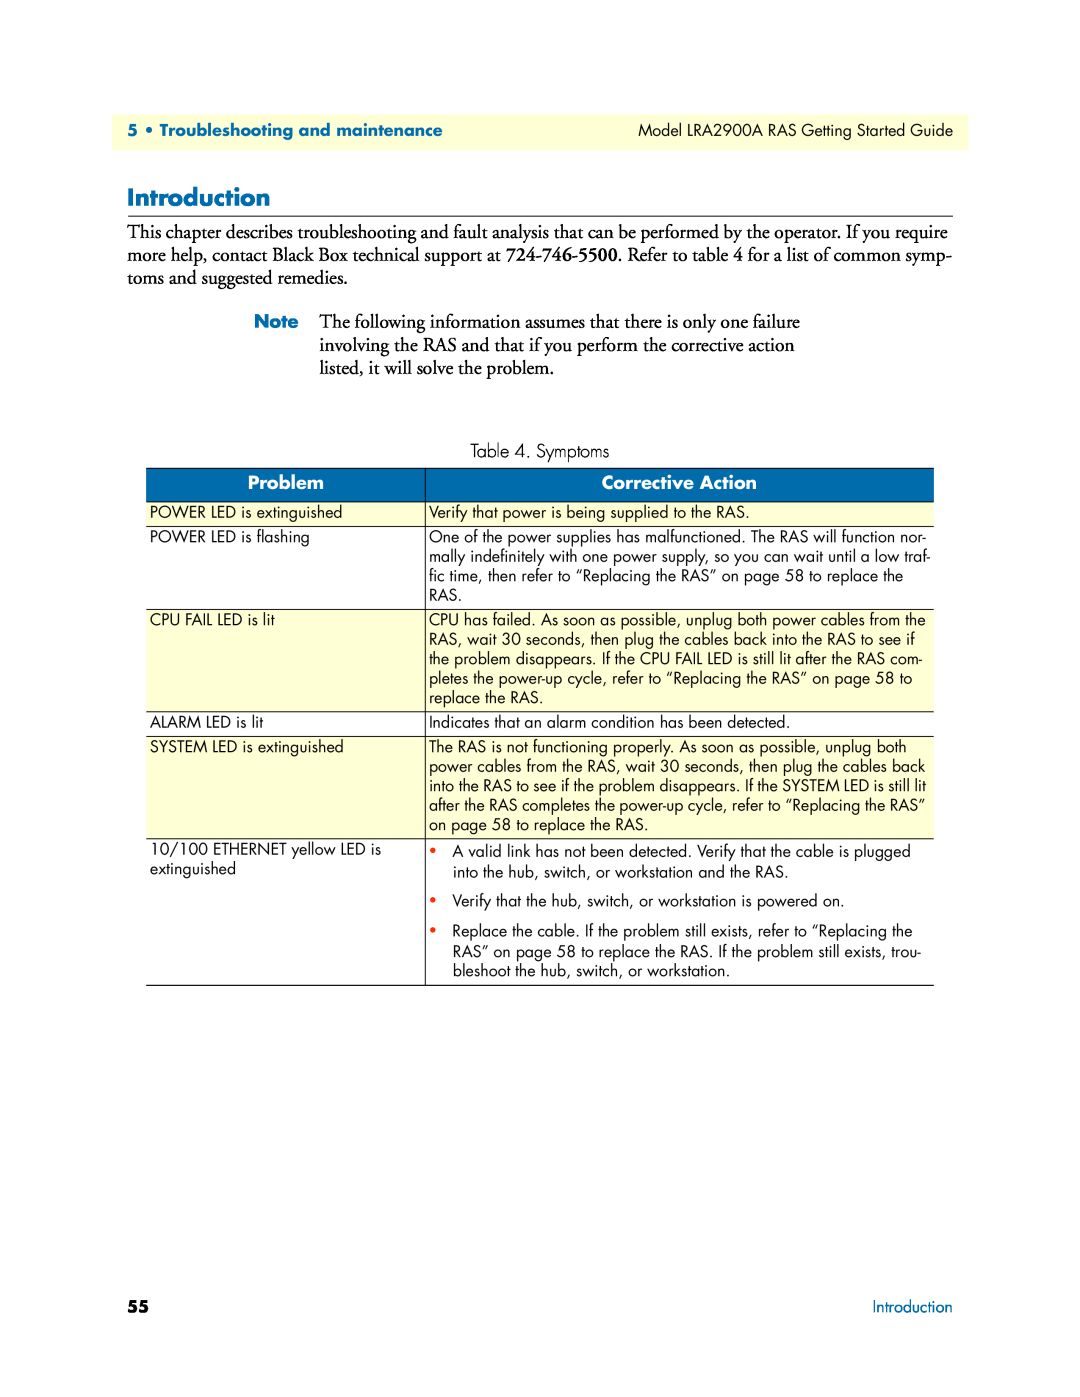 Black Box LRA2900A manual Introduction, Symptoms, Problem, Corrective Action 